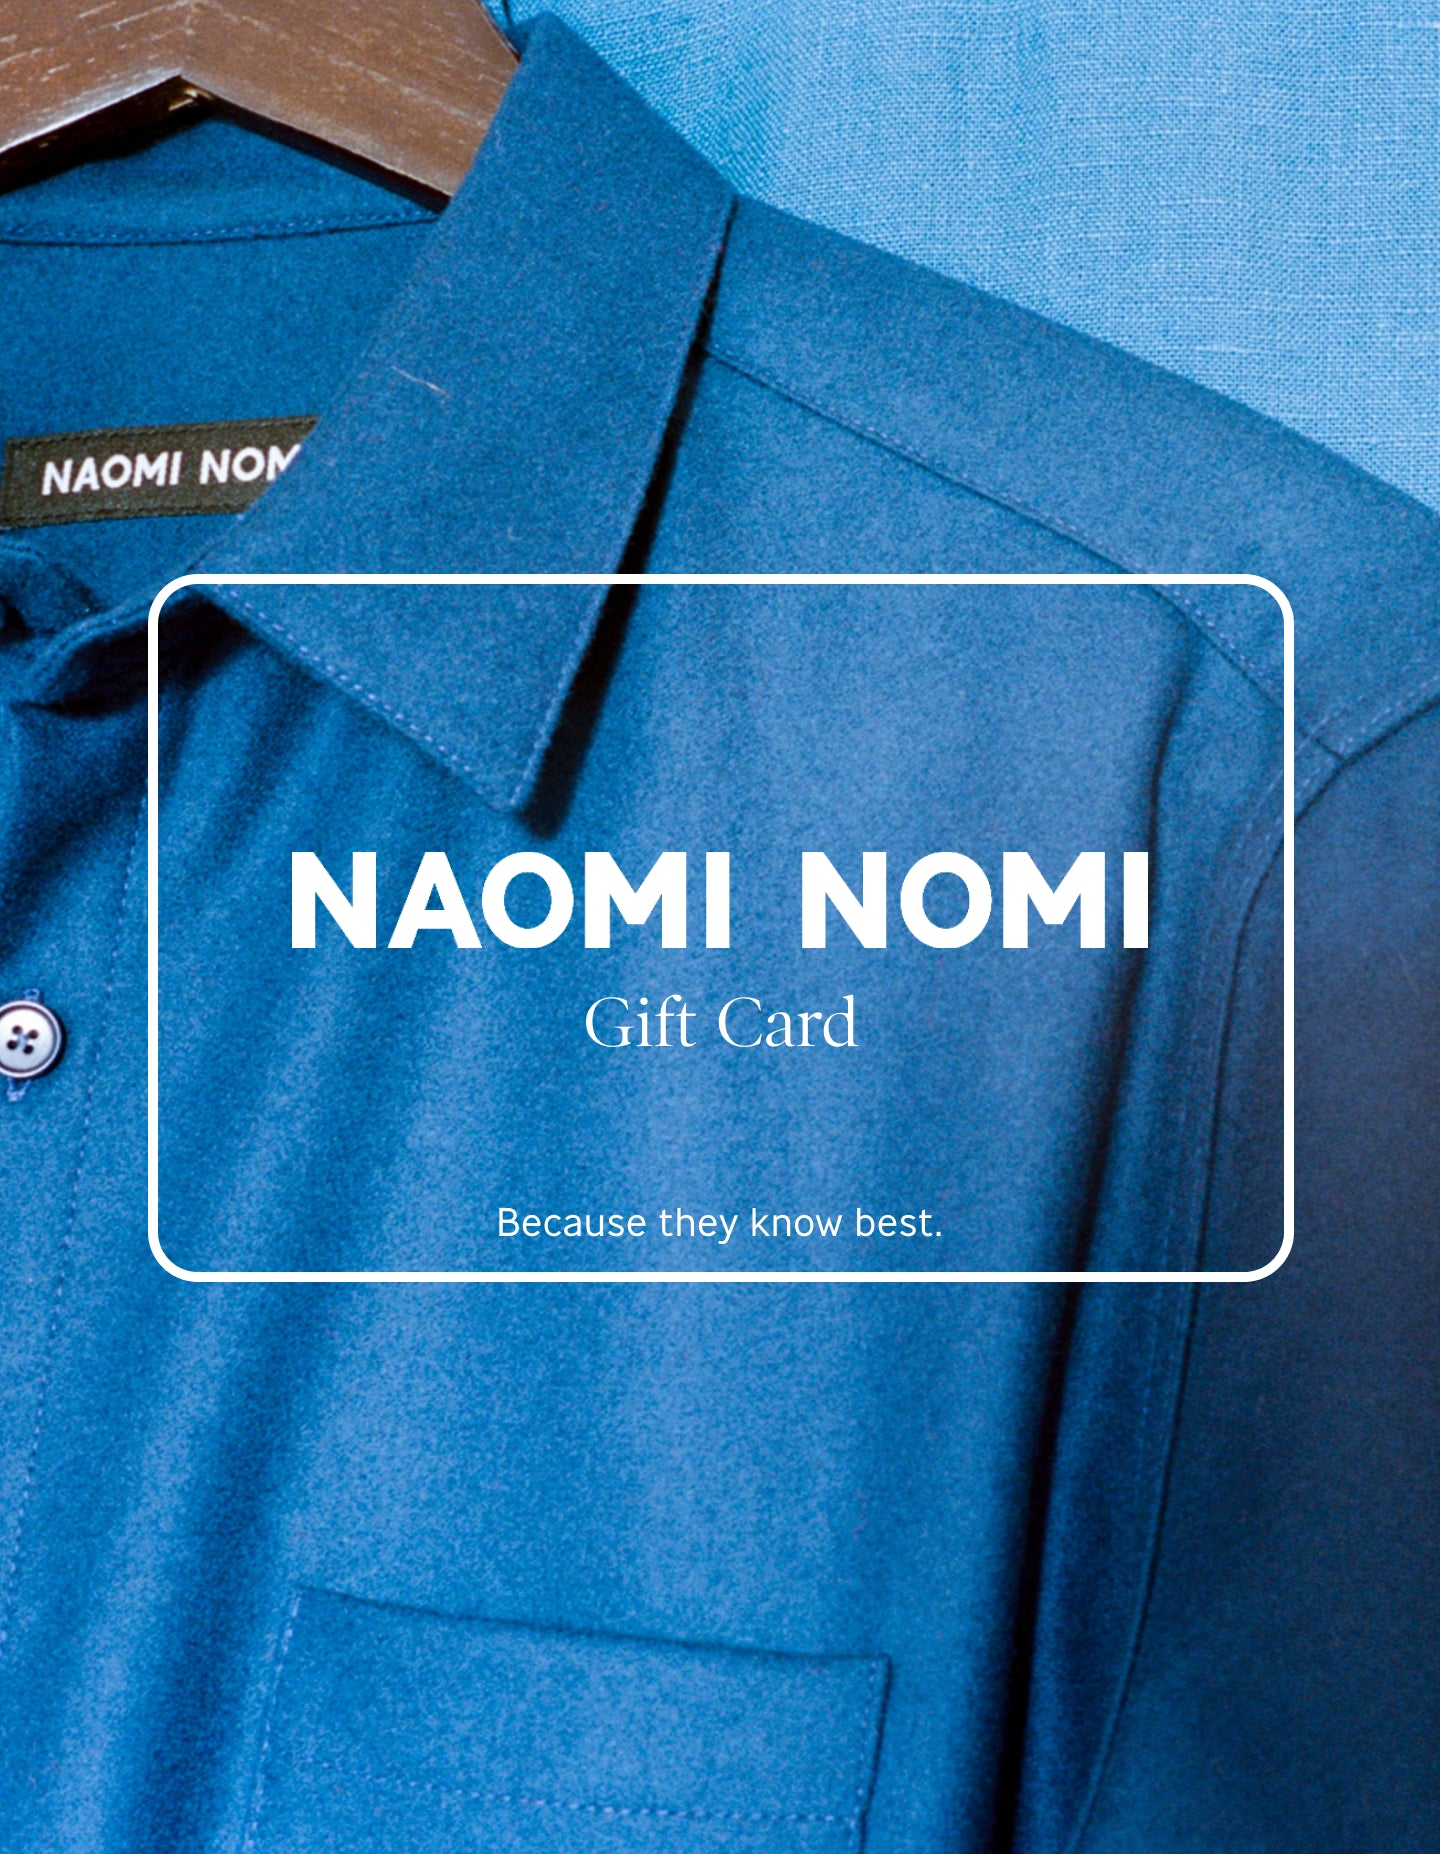 NAOMI NOMI Gift Card (& Free Swatch Card)